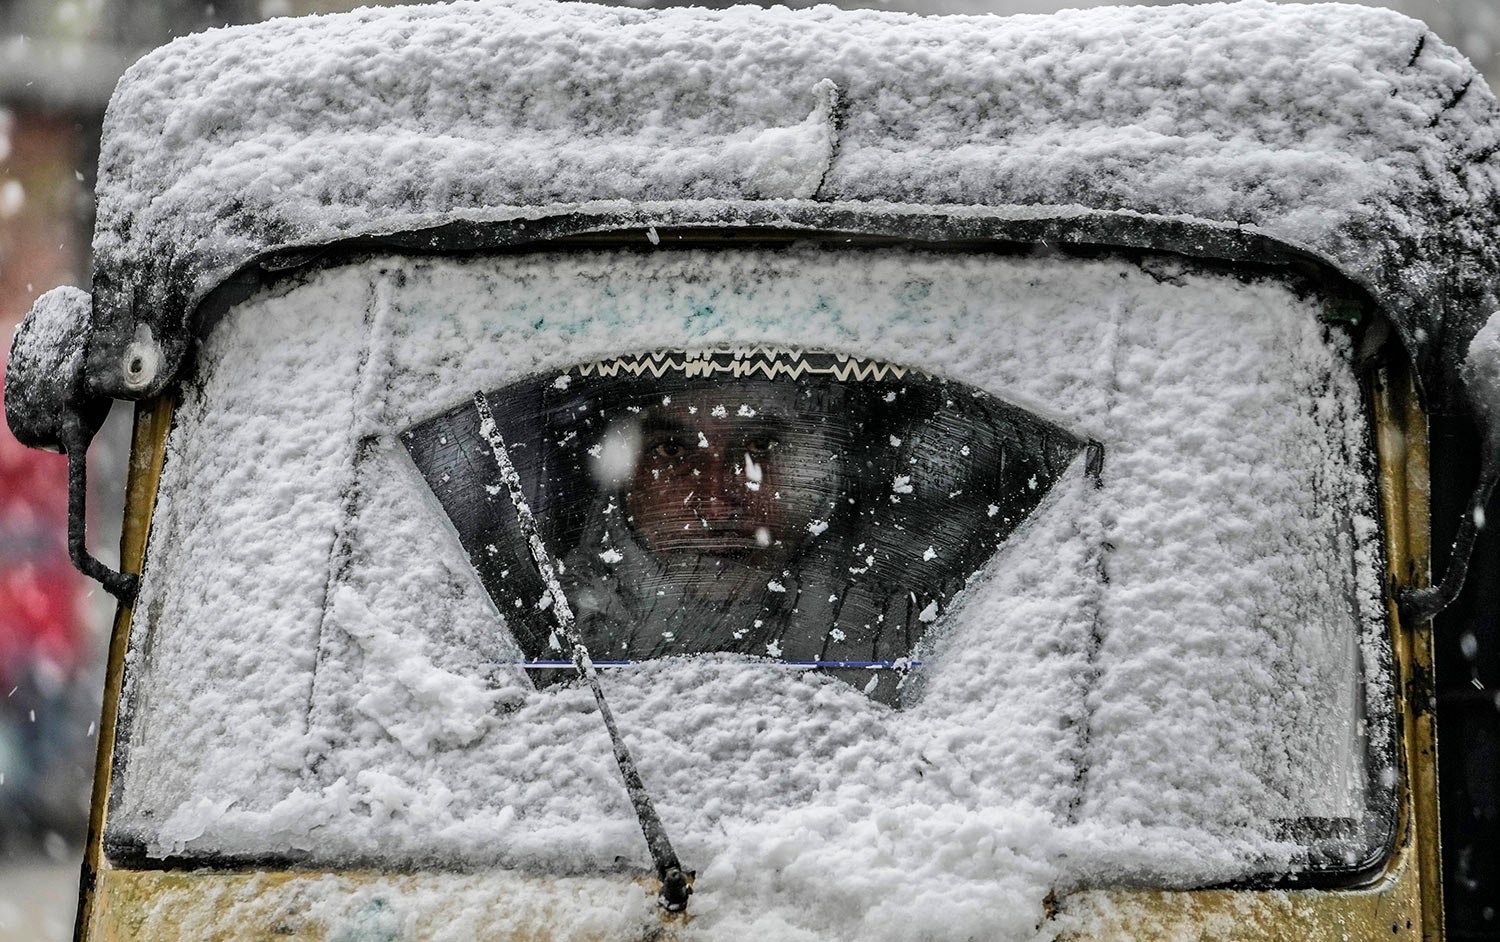  An auto driver looks through a snow-covered windshield in Srinagar, Indian controlled Kashmir, Friday, Jan. 13, 2023. (AP Photo/Mukhtar Khan) 